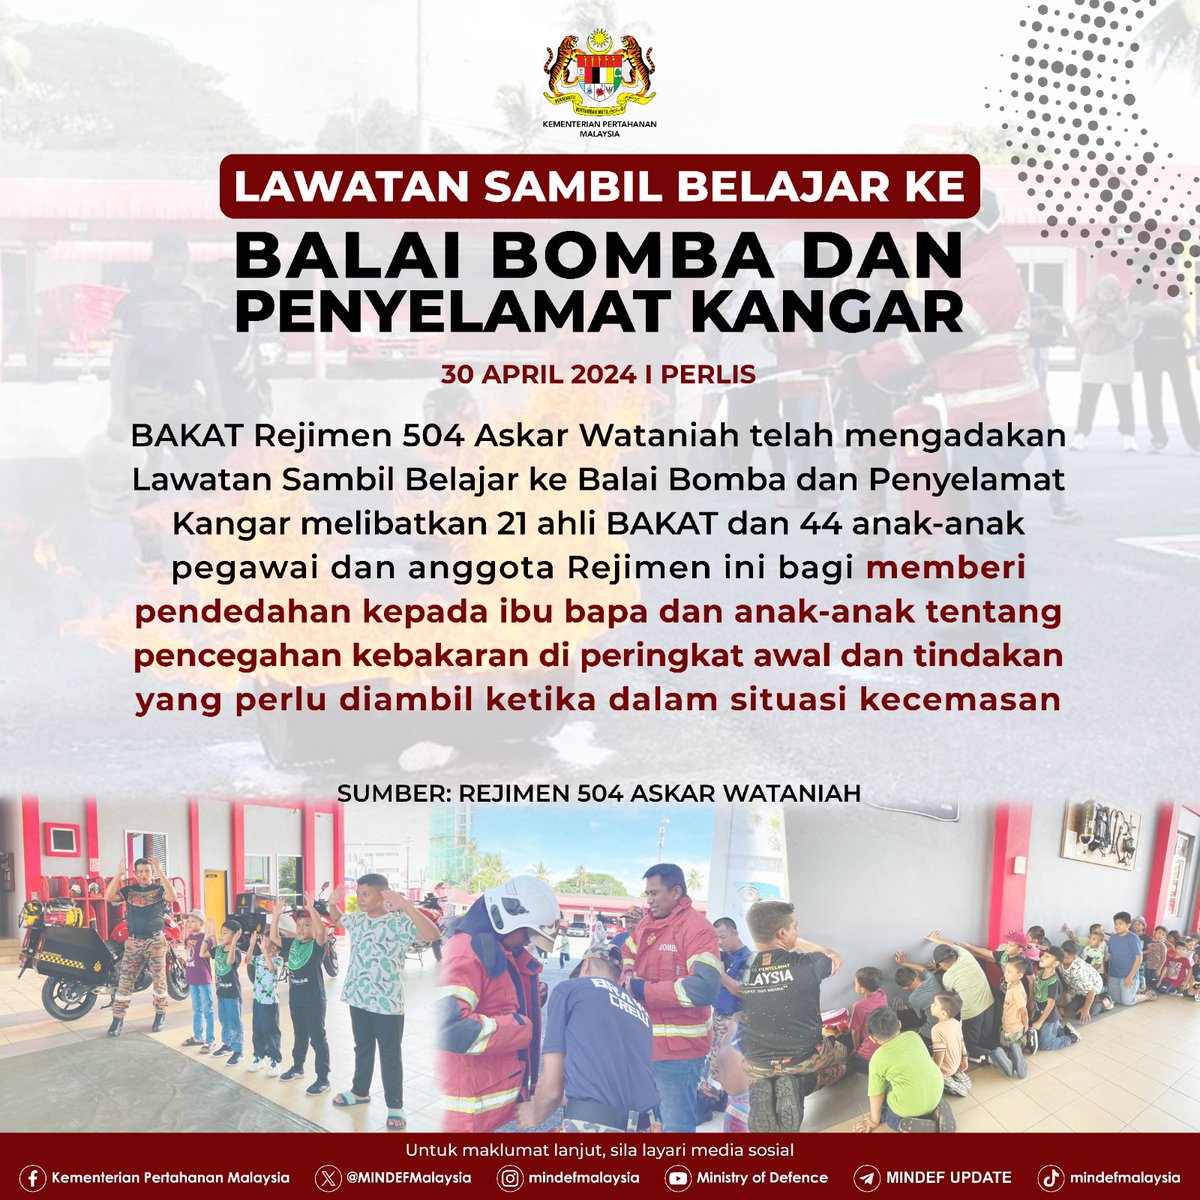 21 ahli BAKAT dan 44 kanak-kanak diberi pendedahan tentang pencegahan kebakaran dan tindakan mendepani situasi kecemasan bersama Jabatan Bomba dan Penyelamat Kangar

#MinDefMalaysia
#MinDefUpdate
#CIMIC
#programjiwamurni
#jiwamurni
#ATM